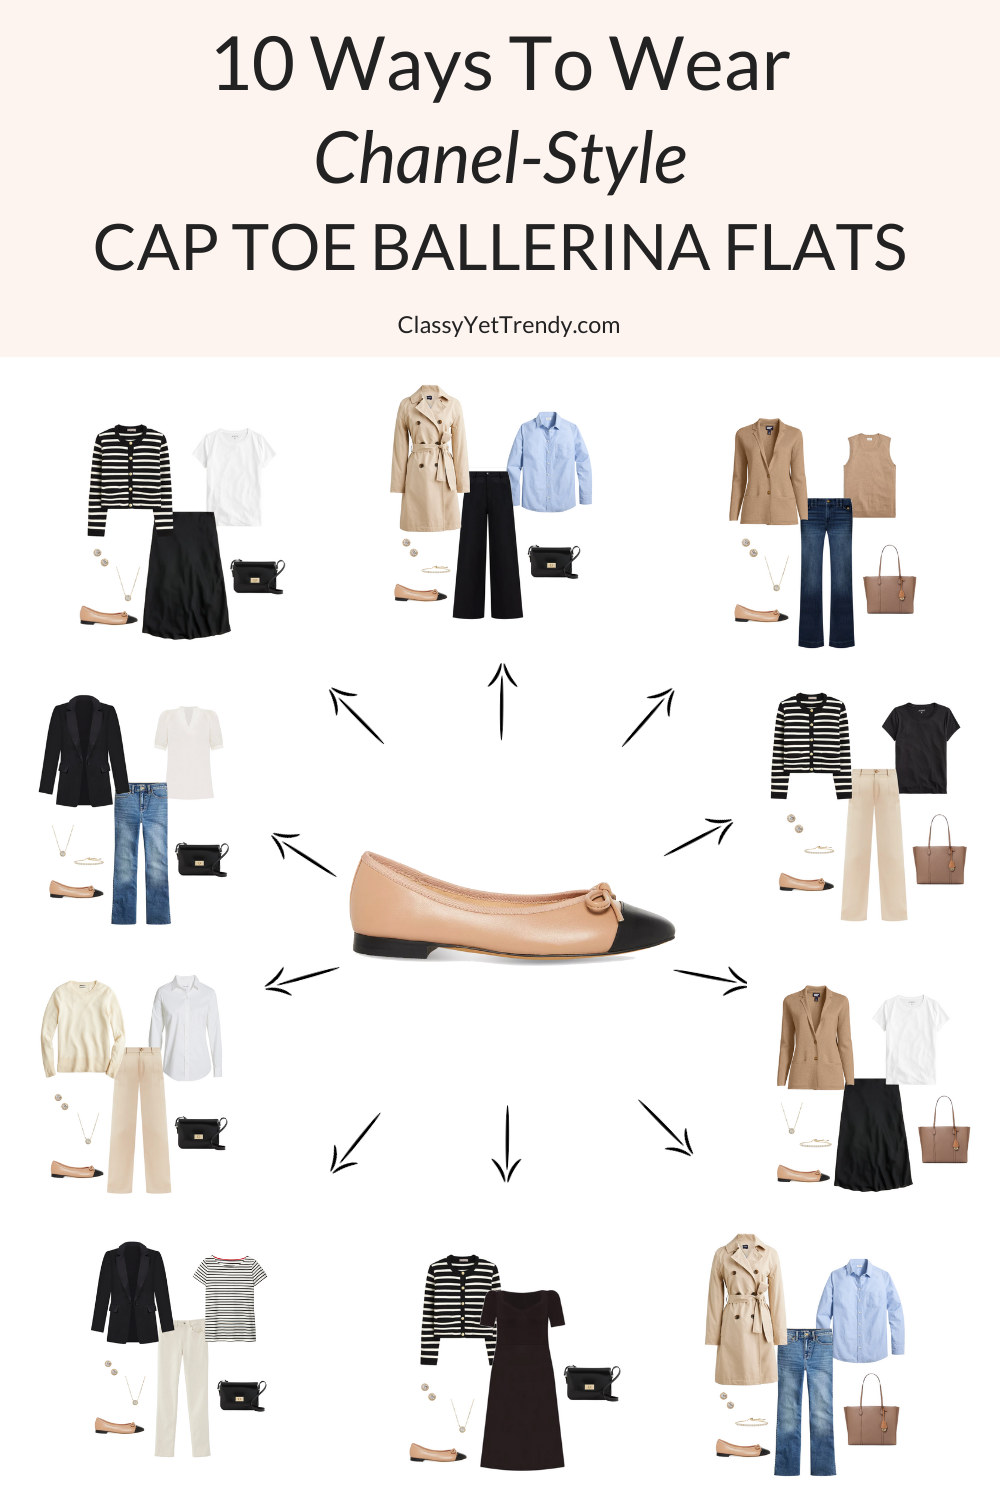 10 Ways To Wear Chanel-Style Cap Toe Ballerina Flats - Classy Yet Trendy